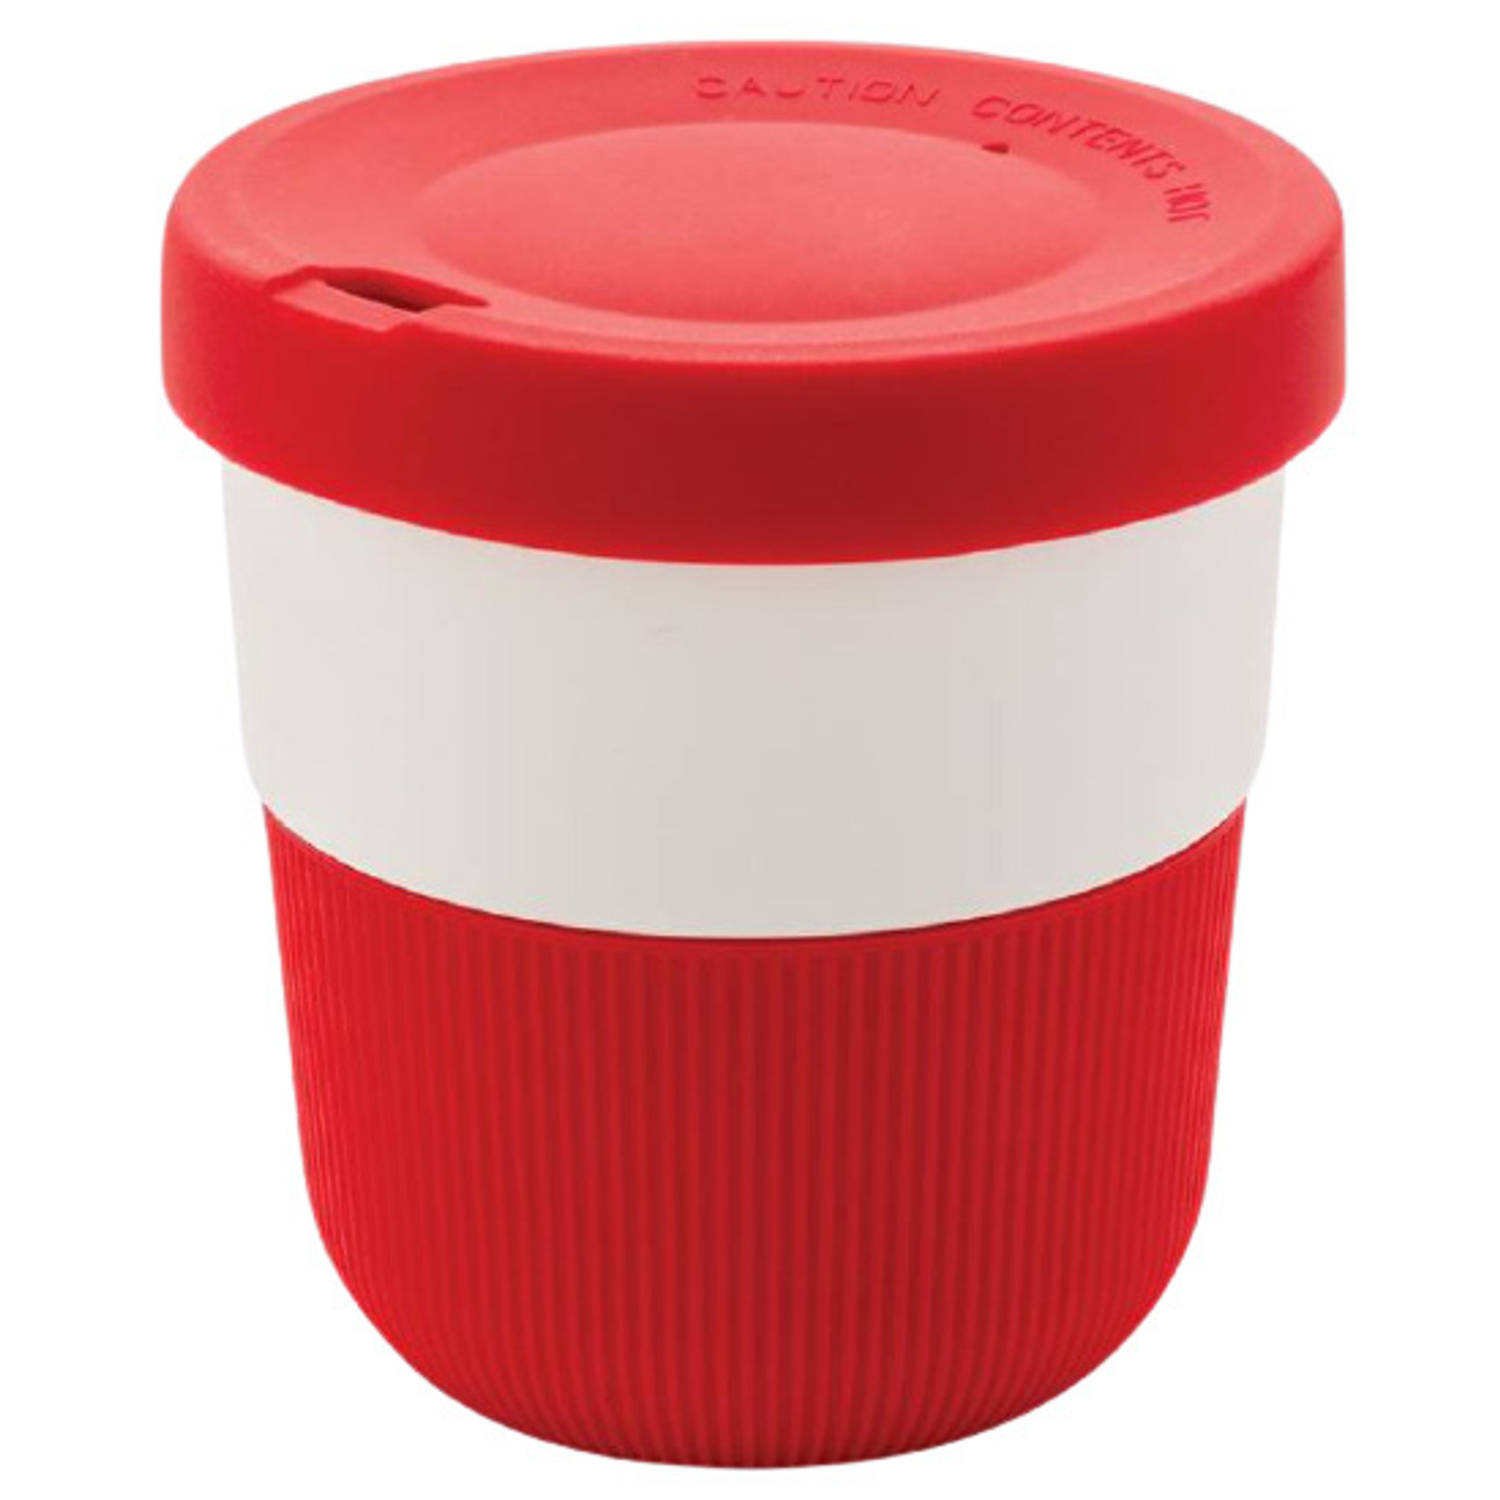 Proficiat pint verdediging XD Collection koffiebeker to go 8,6 cm plantaardig rood | Blokker